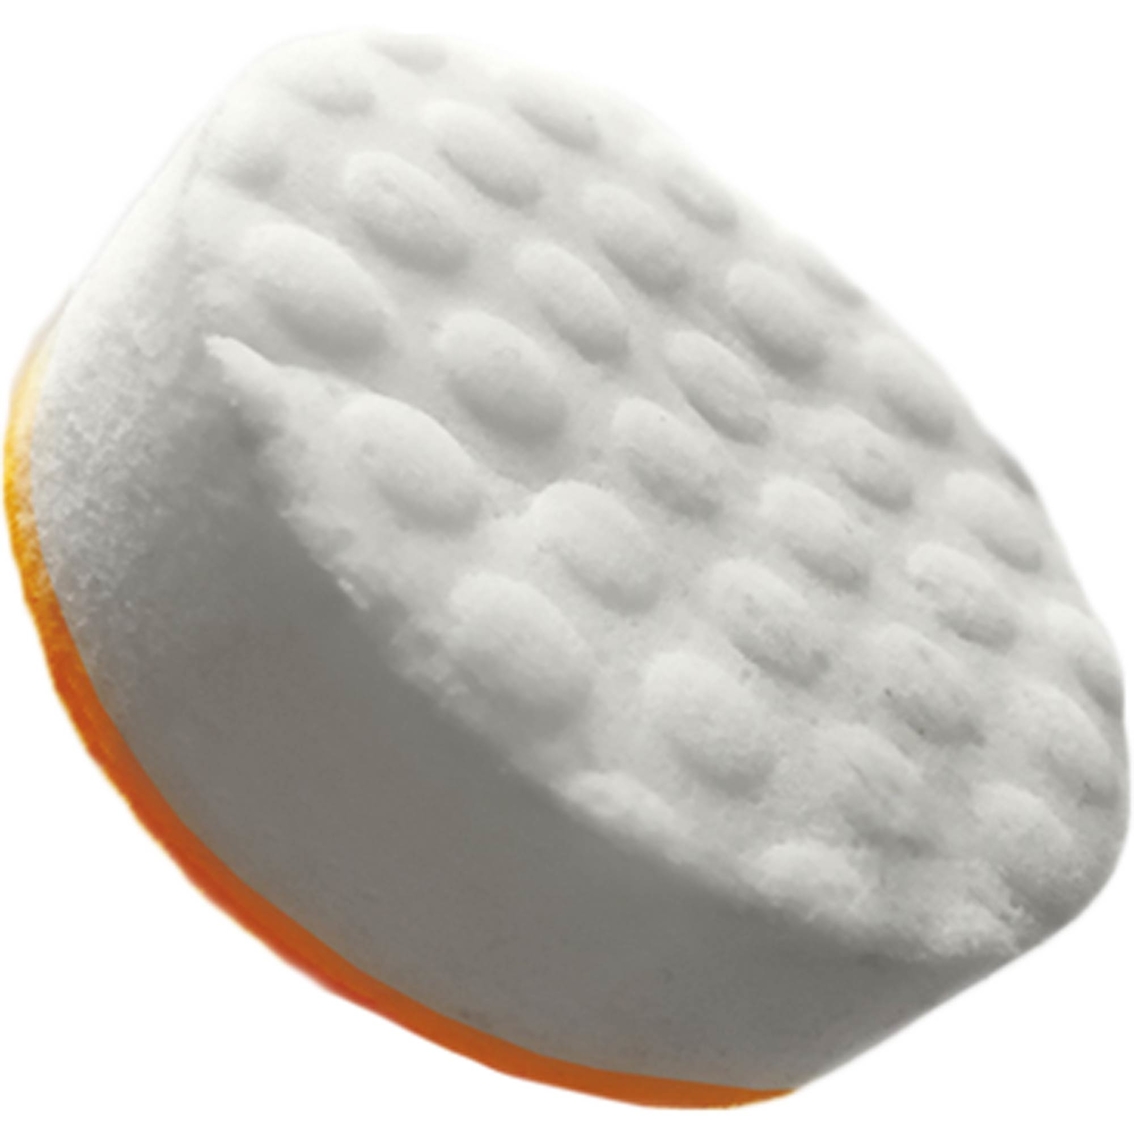 SneakERASERS Dry Sponges 10 pk. - Image 3 of 3